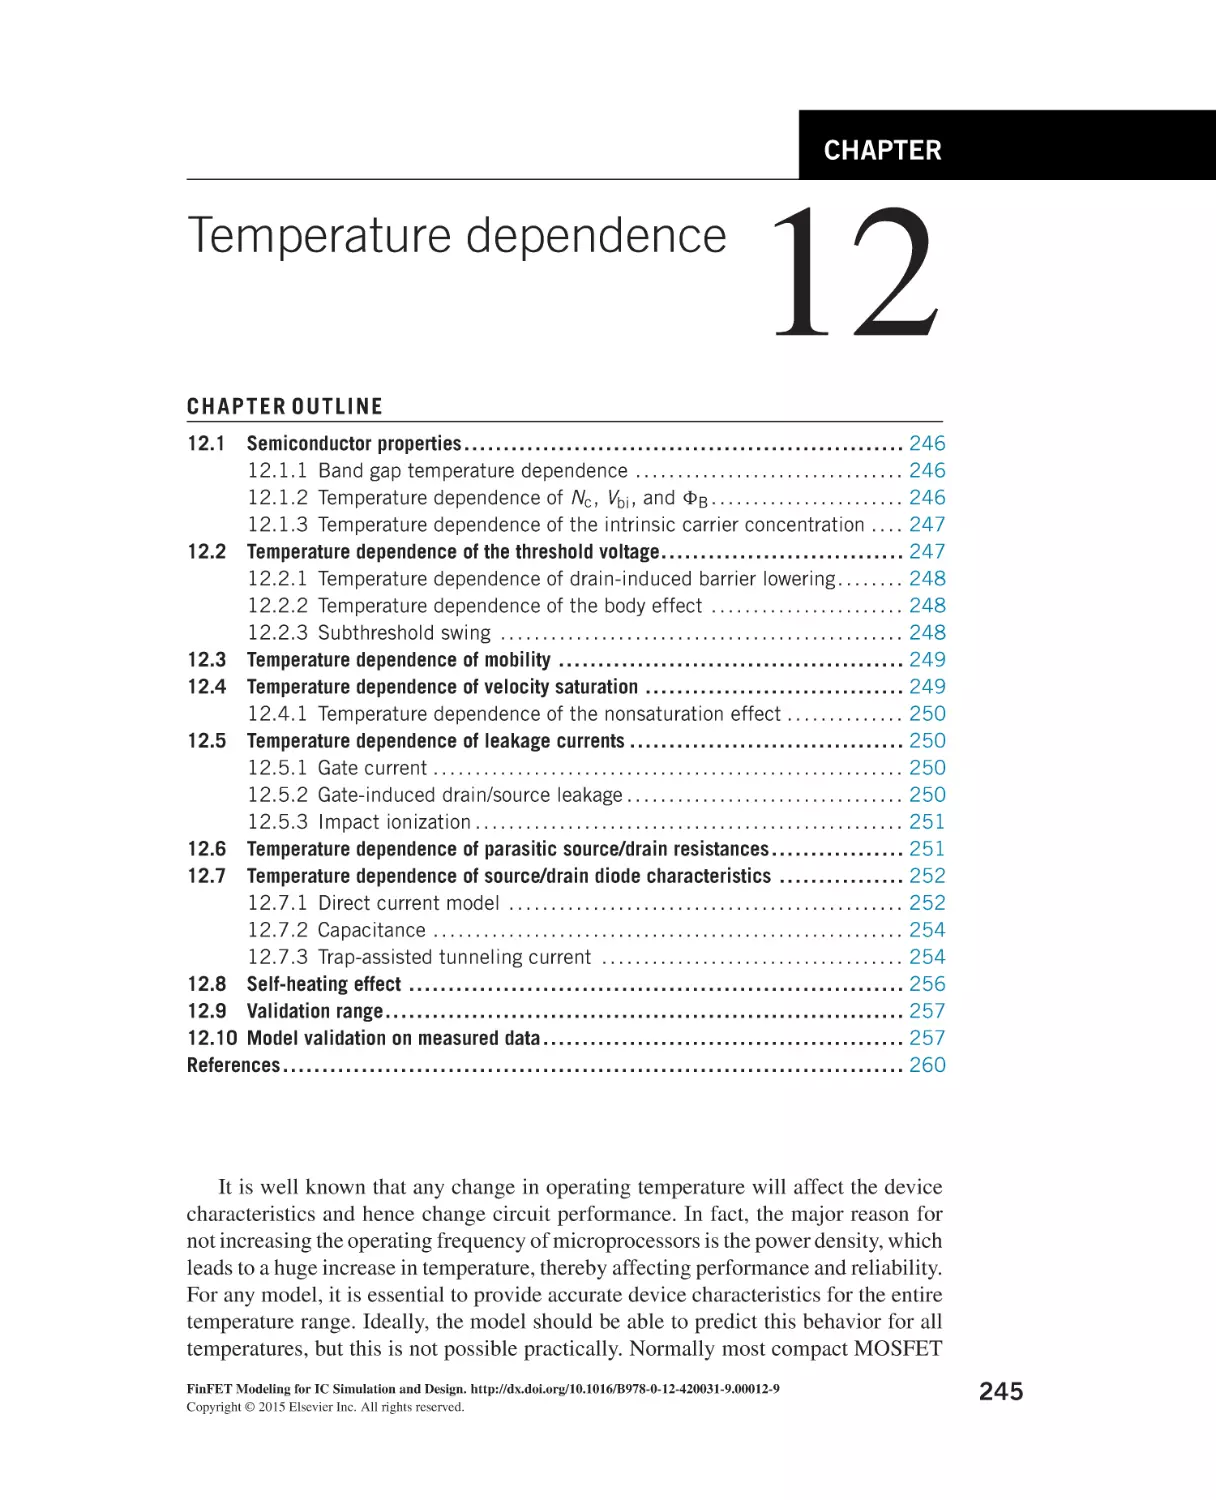 Temperature dependence